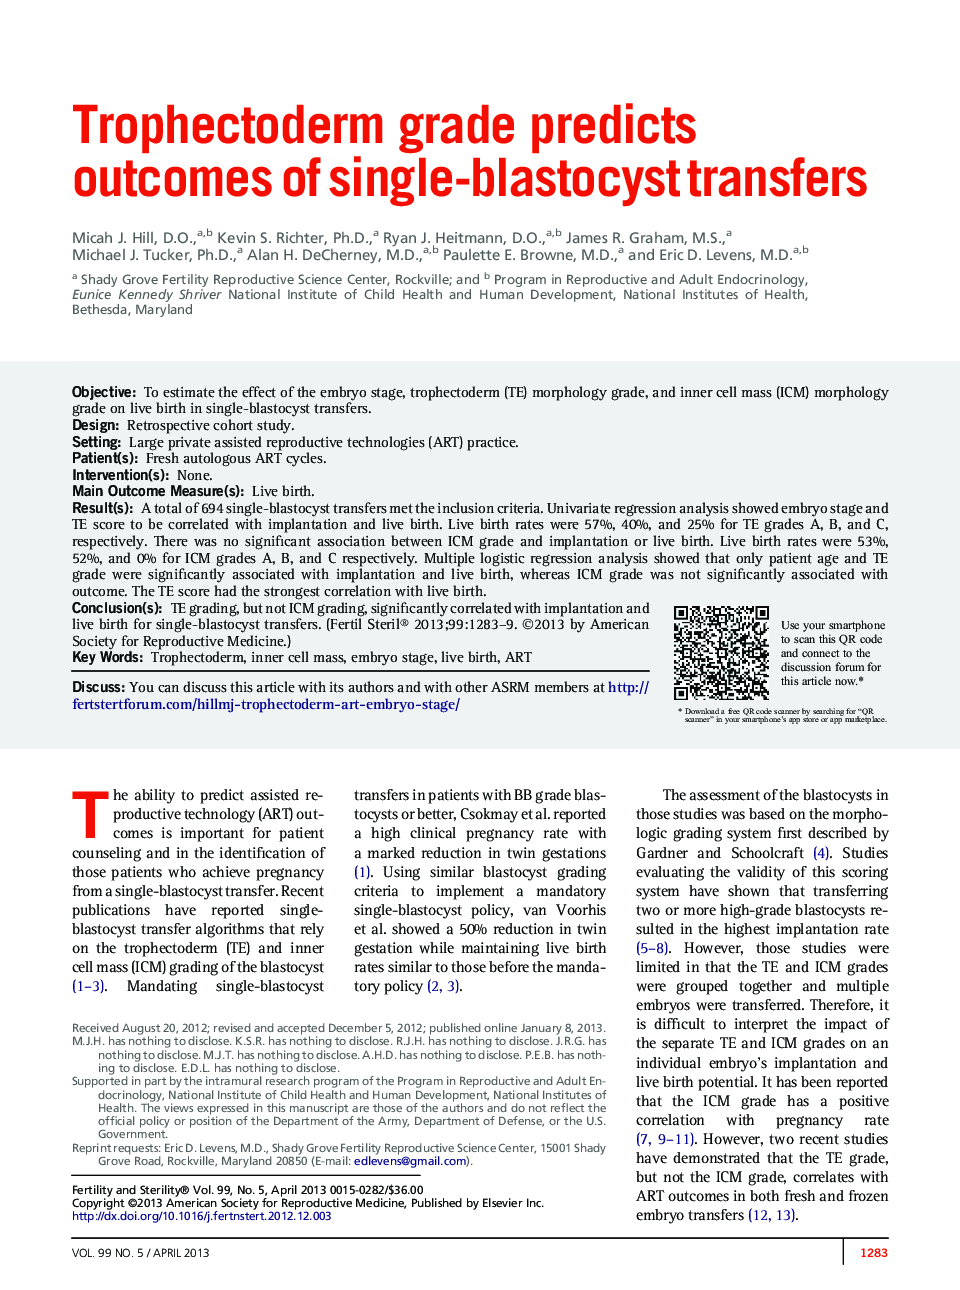 Trophectoderm grade predicts outcomes of single-blastocyst transfers